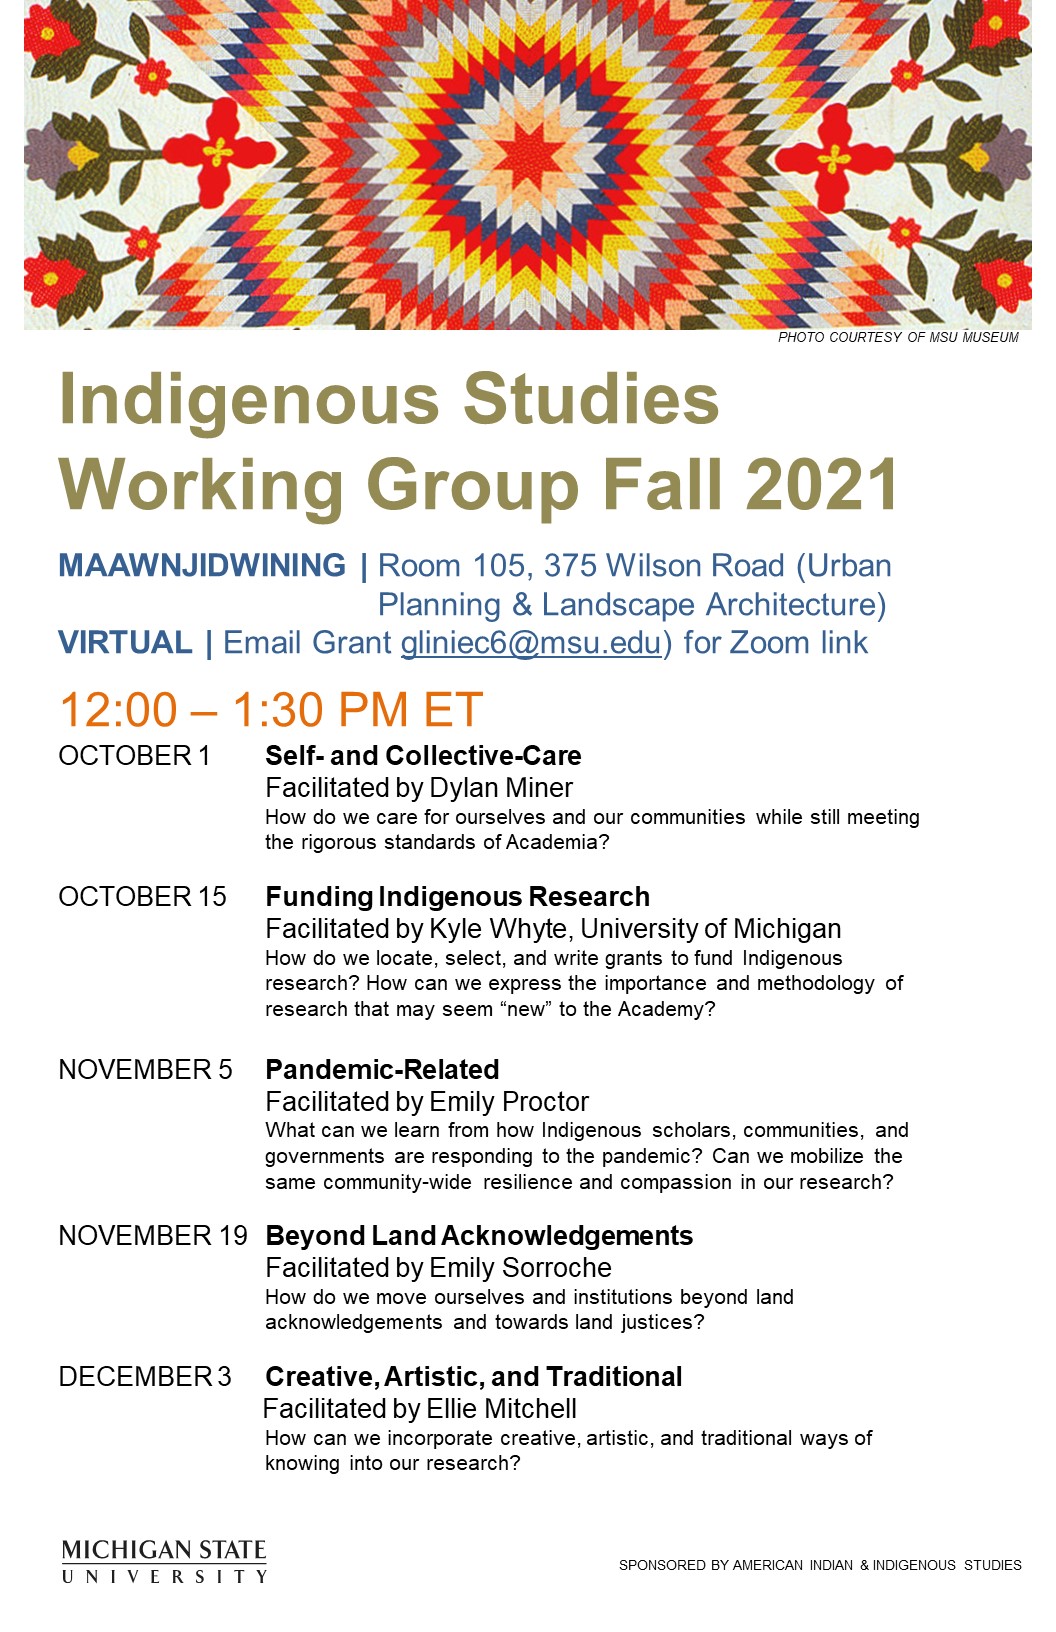 Indigenous Studies Working Group Fall 2021